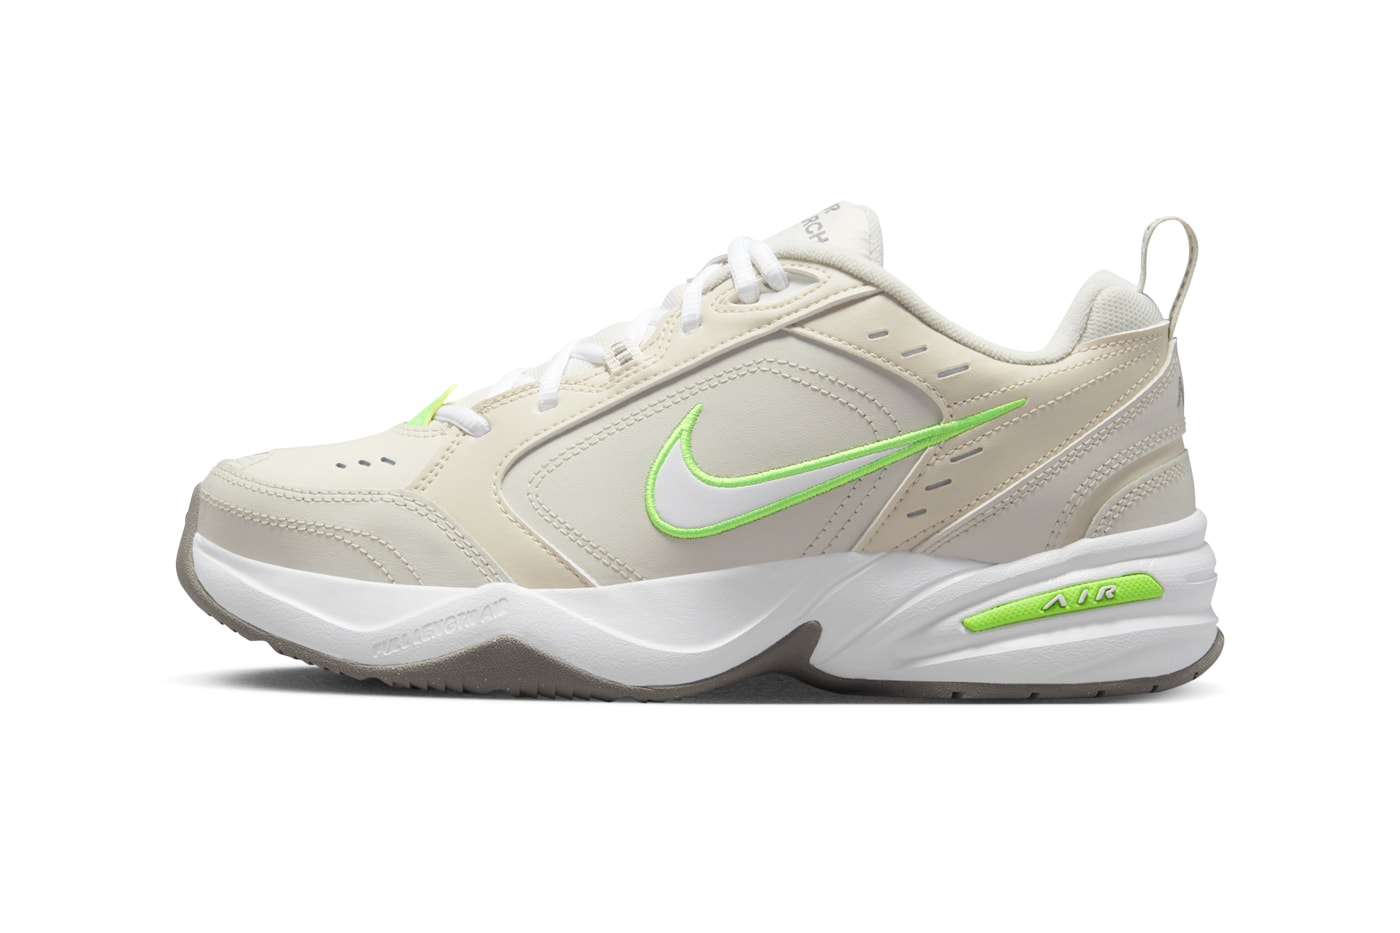 Nike Air Monarch IV Returns in "Light Bone" FN3436-011 release info Light Bone/Light Mahogany-White-Shock Green-Pewter Grey dad shoes